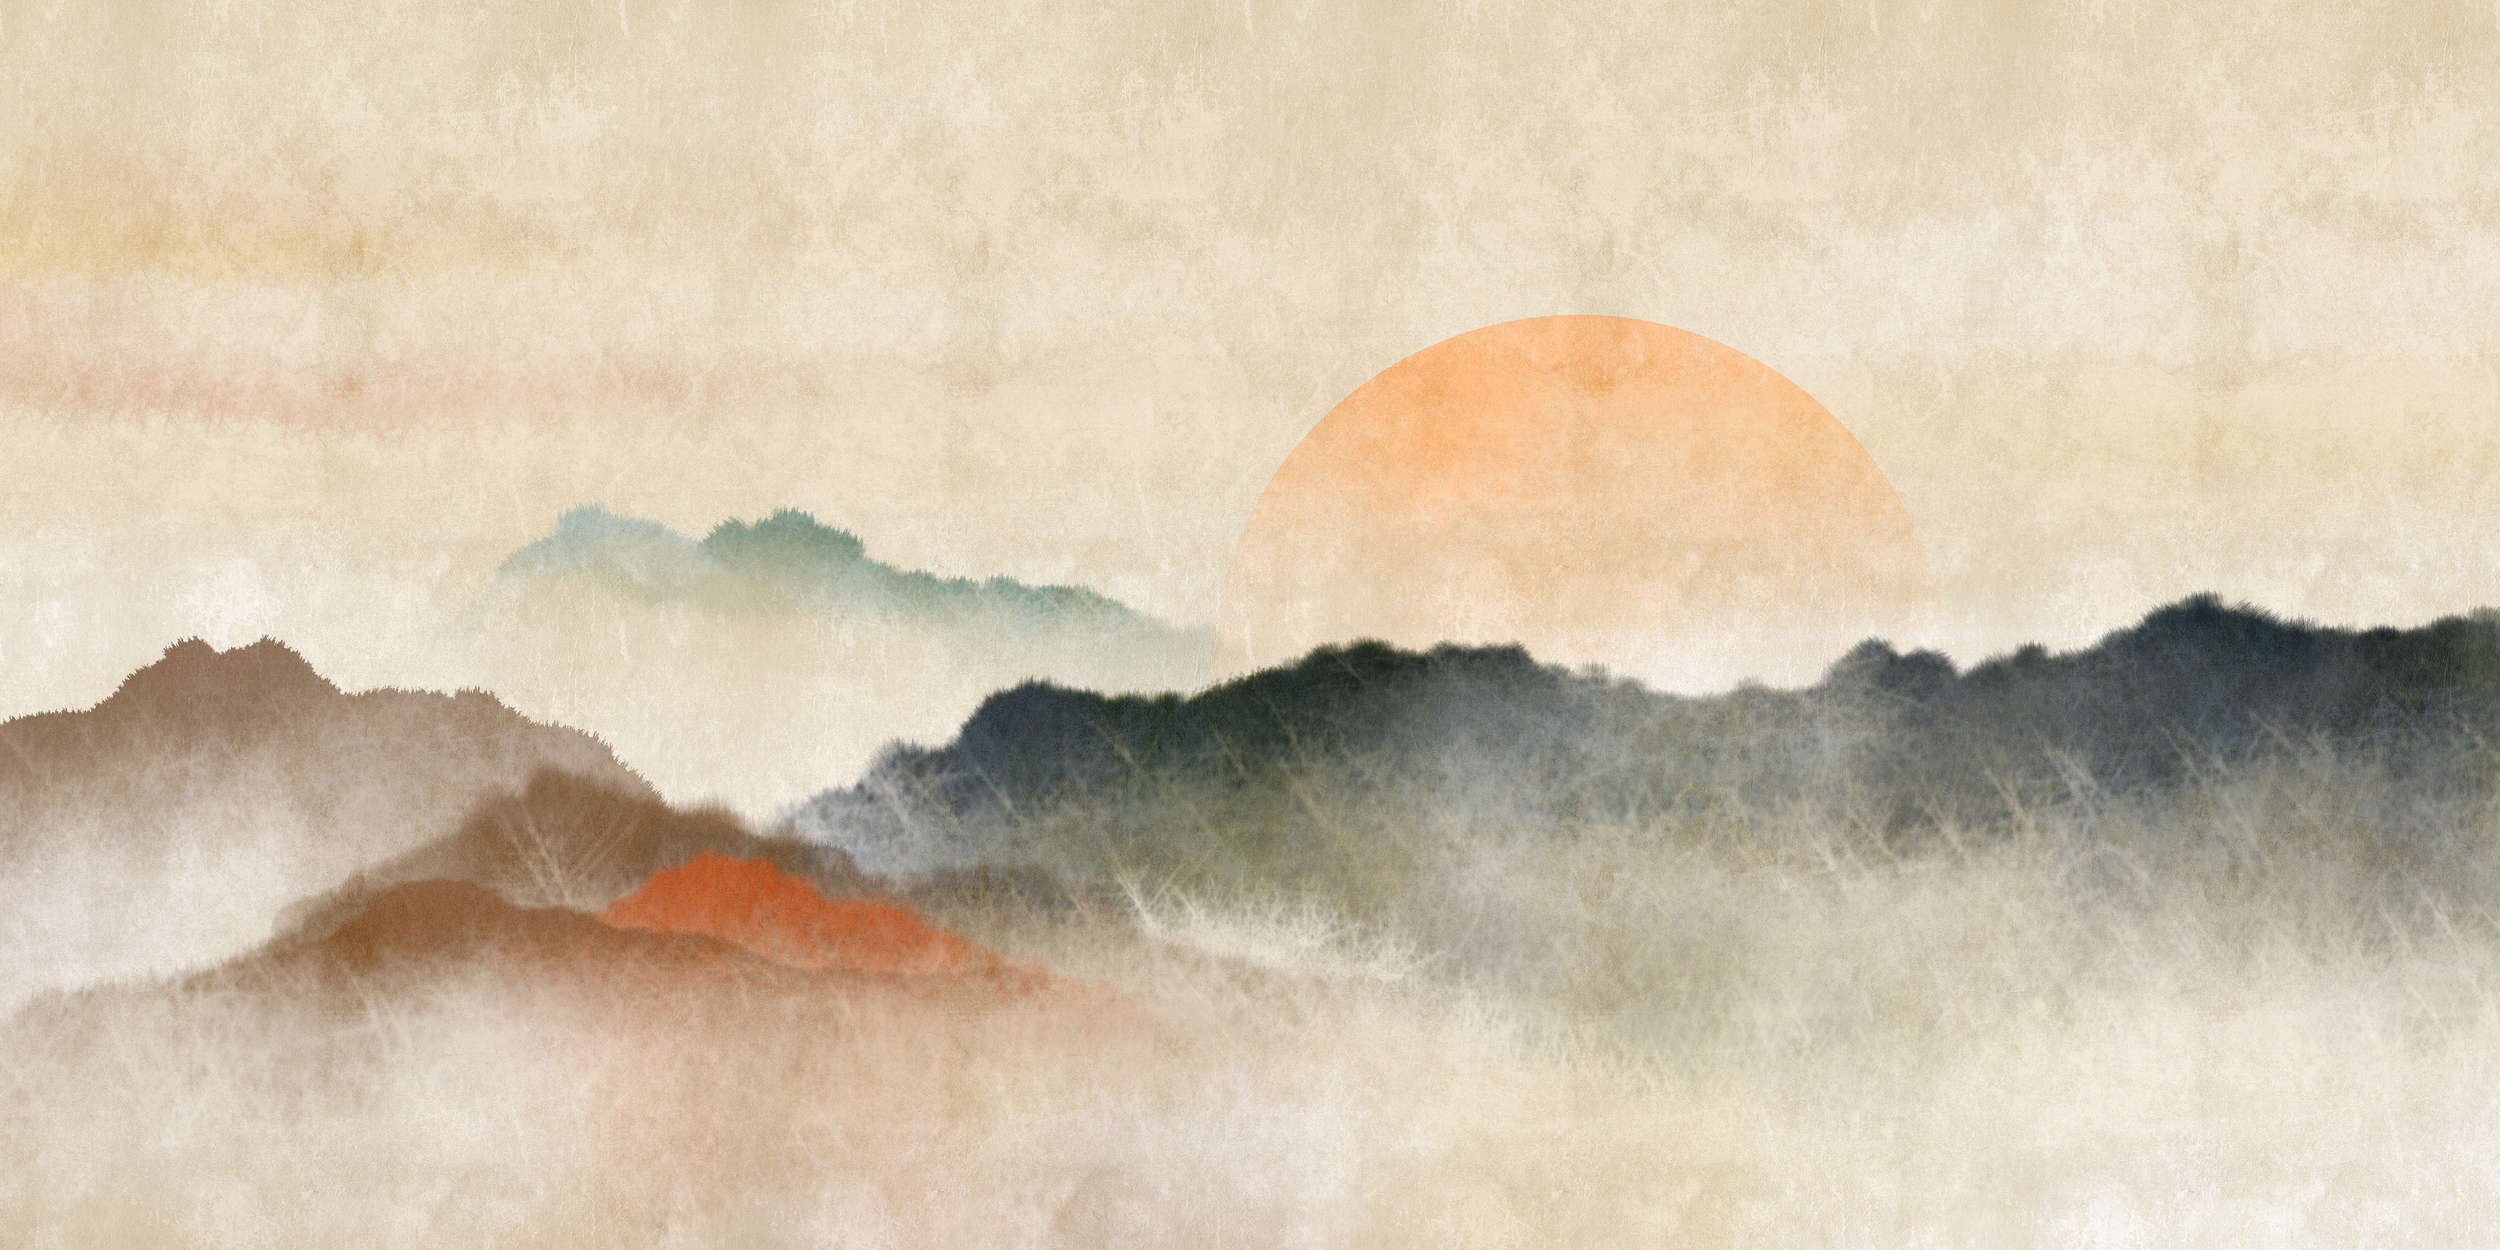             Akaishi 3 - Zonsopgang Behang, Azië Stijl Kunstdruk
        